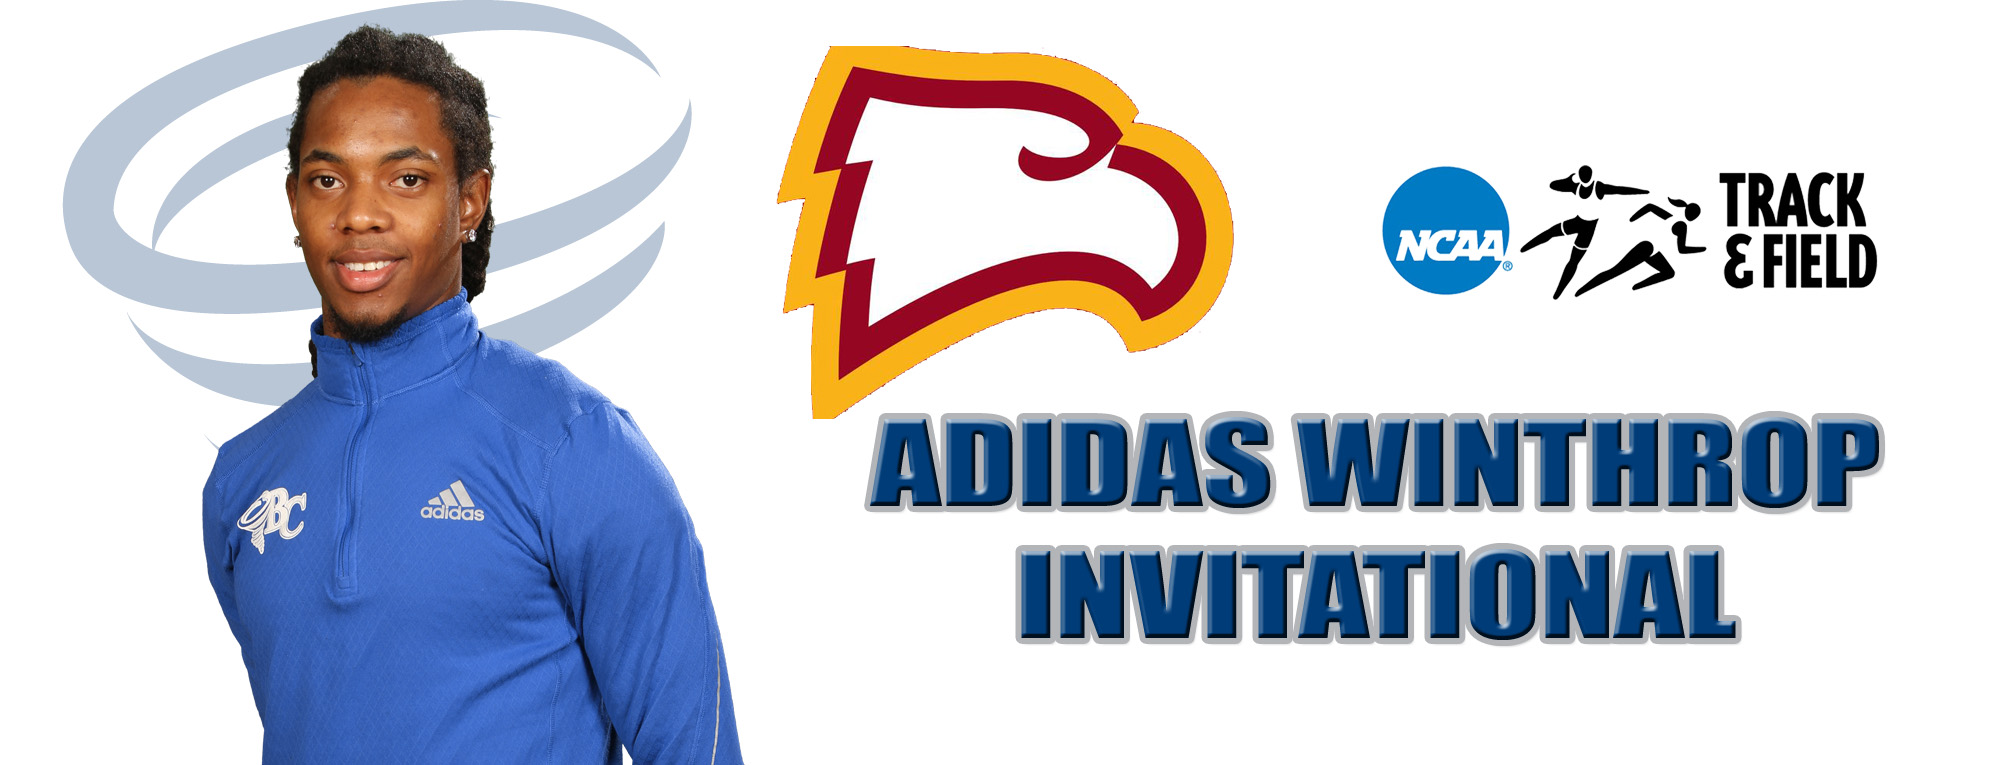 Adidas Winthrop Invitational Awaits Track & Field